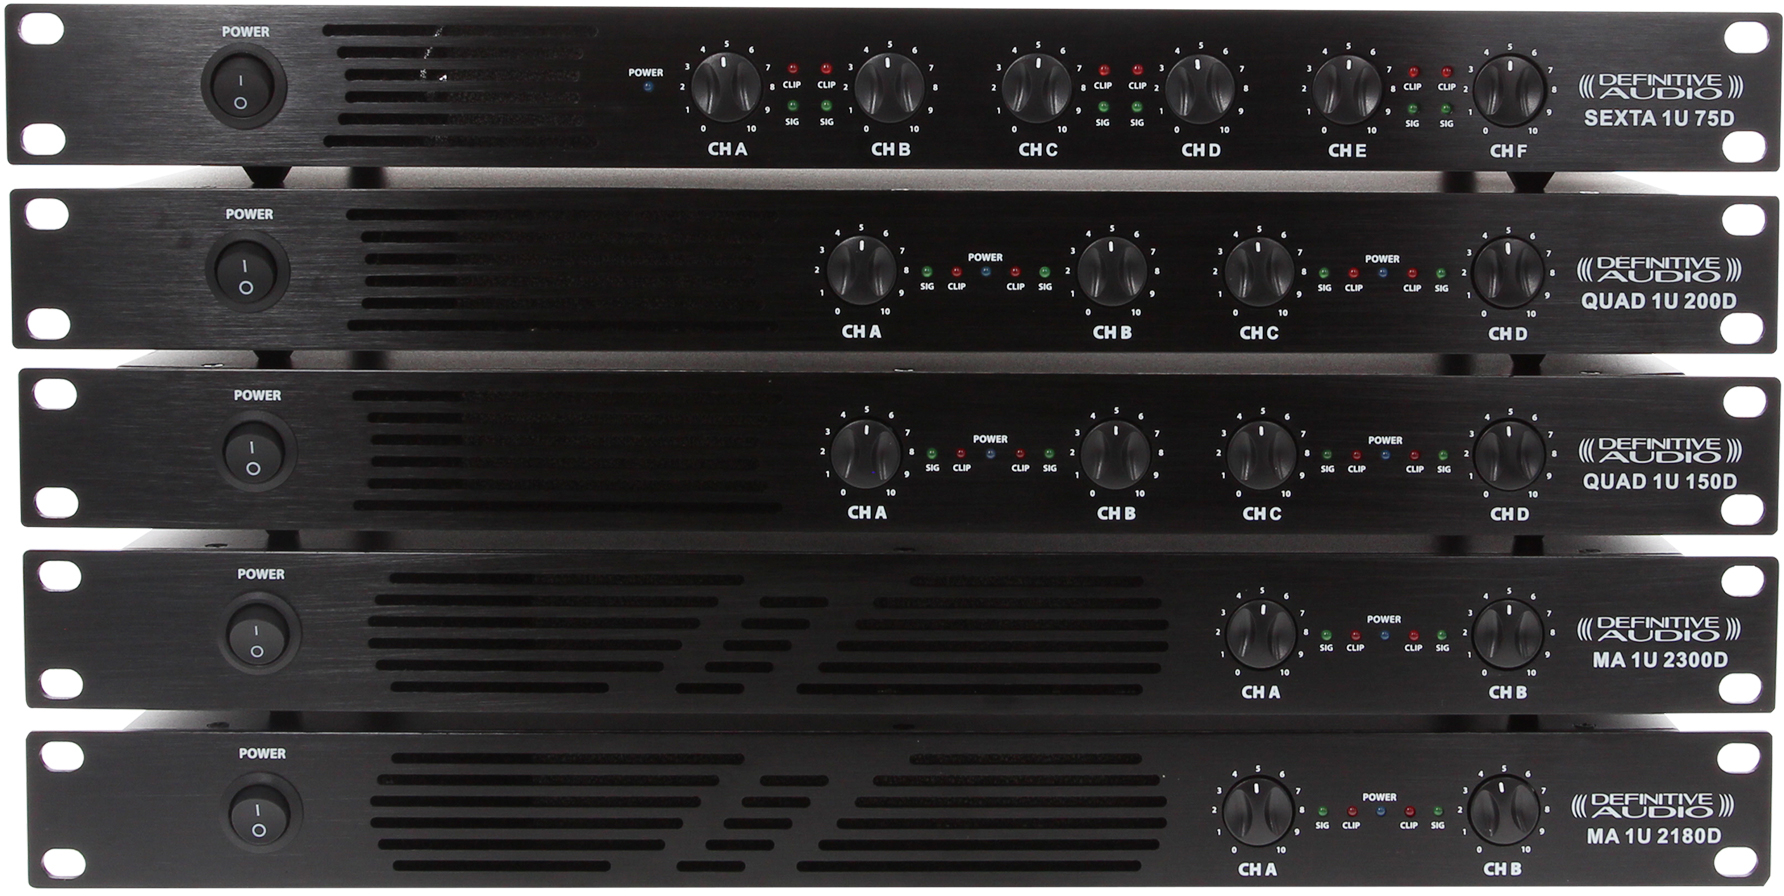 Definitive Audio Quad 1u 150d - Multi-kanalen krachtversterker - Variation 5